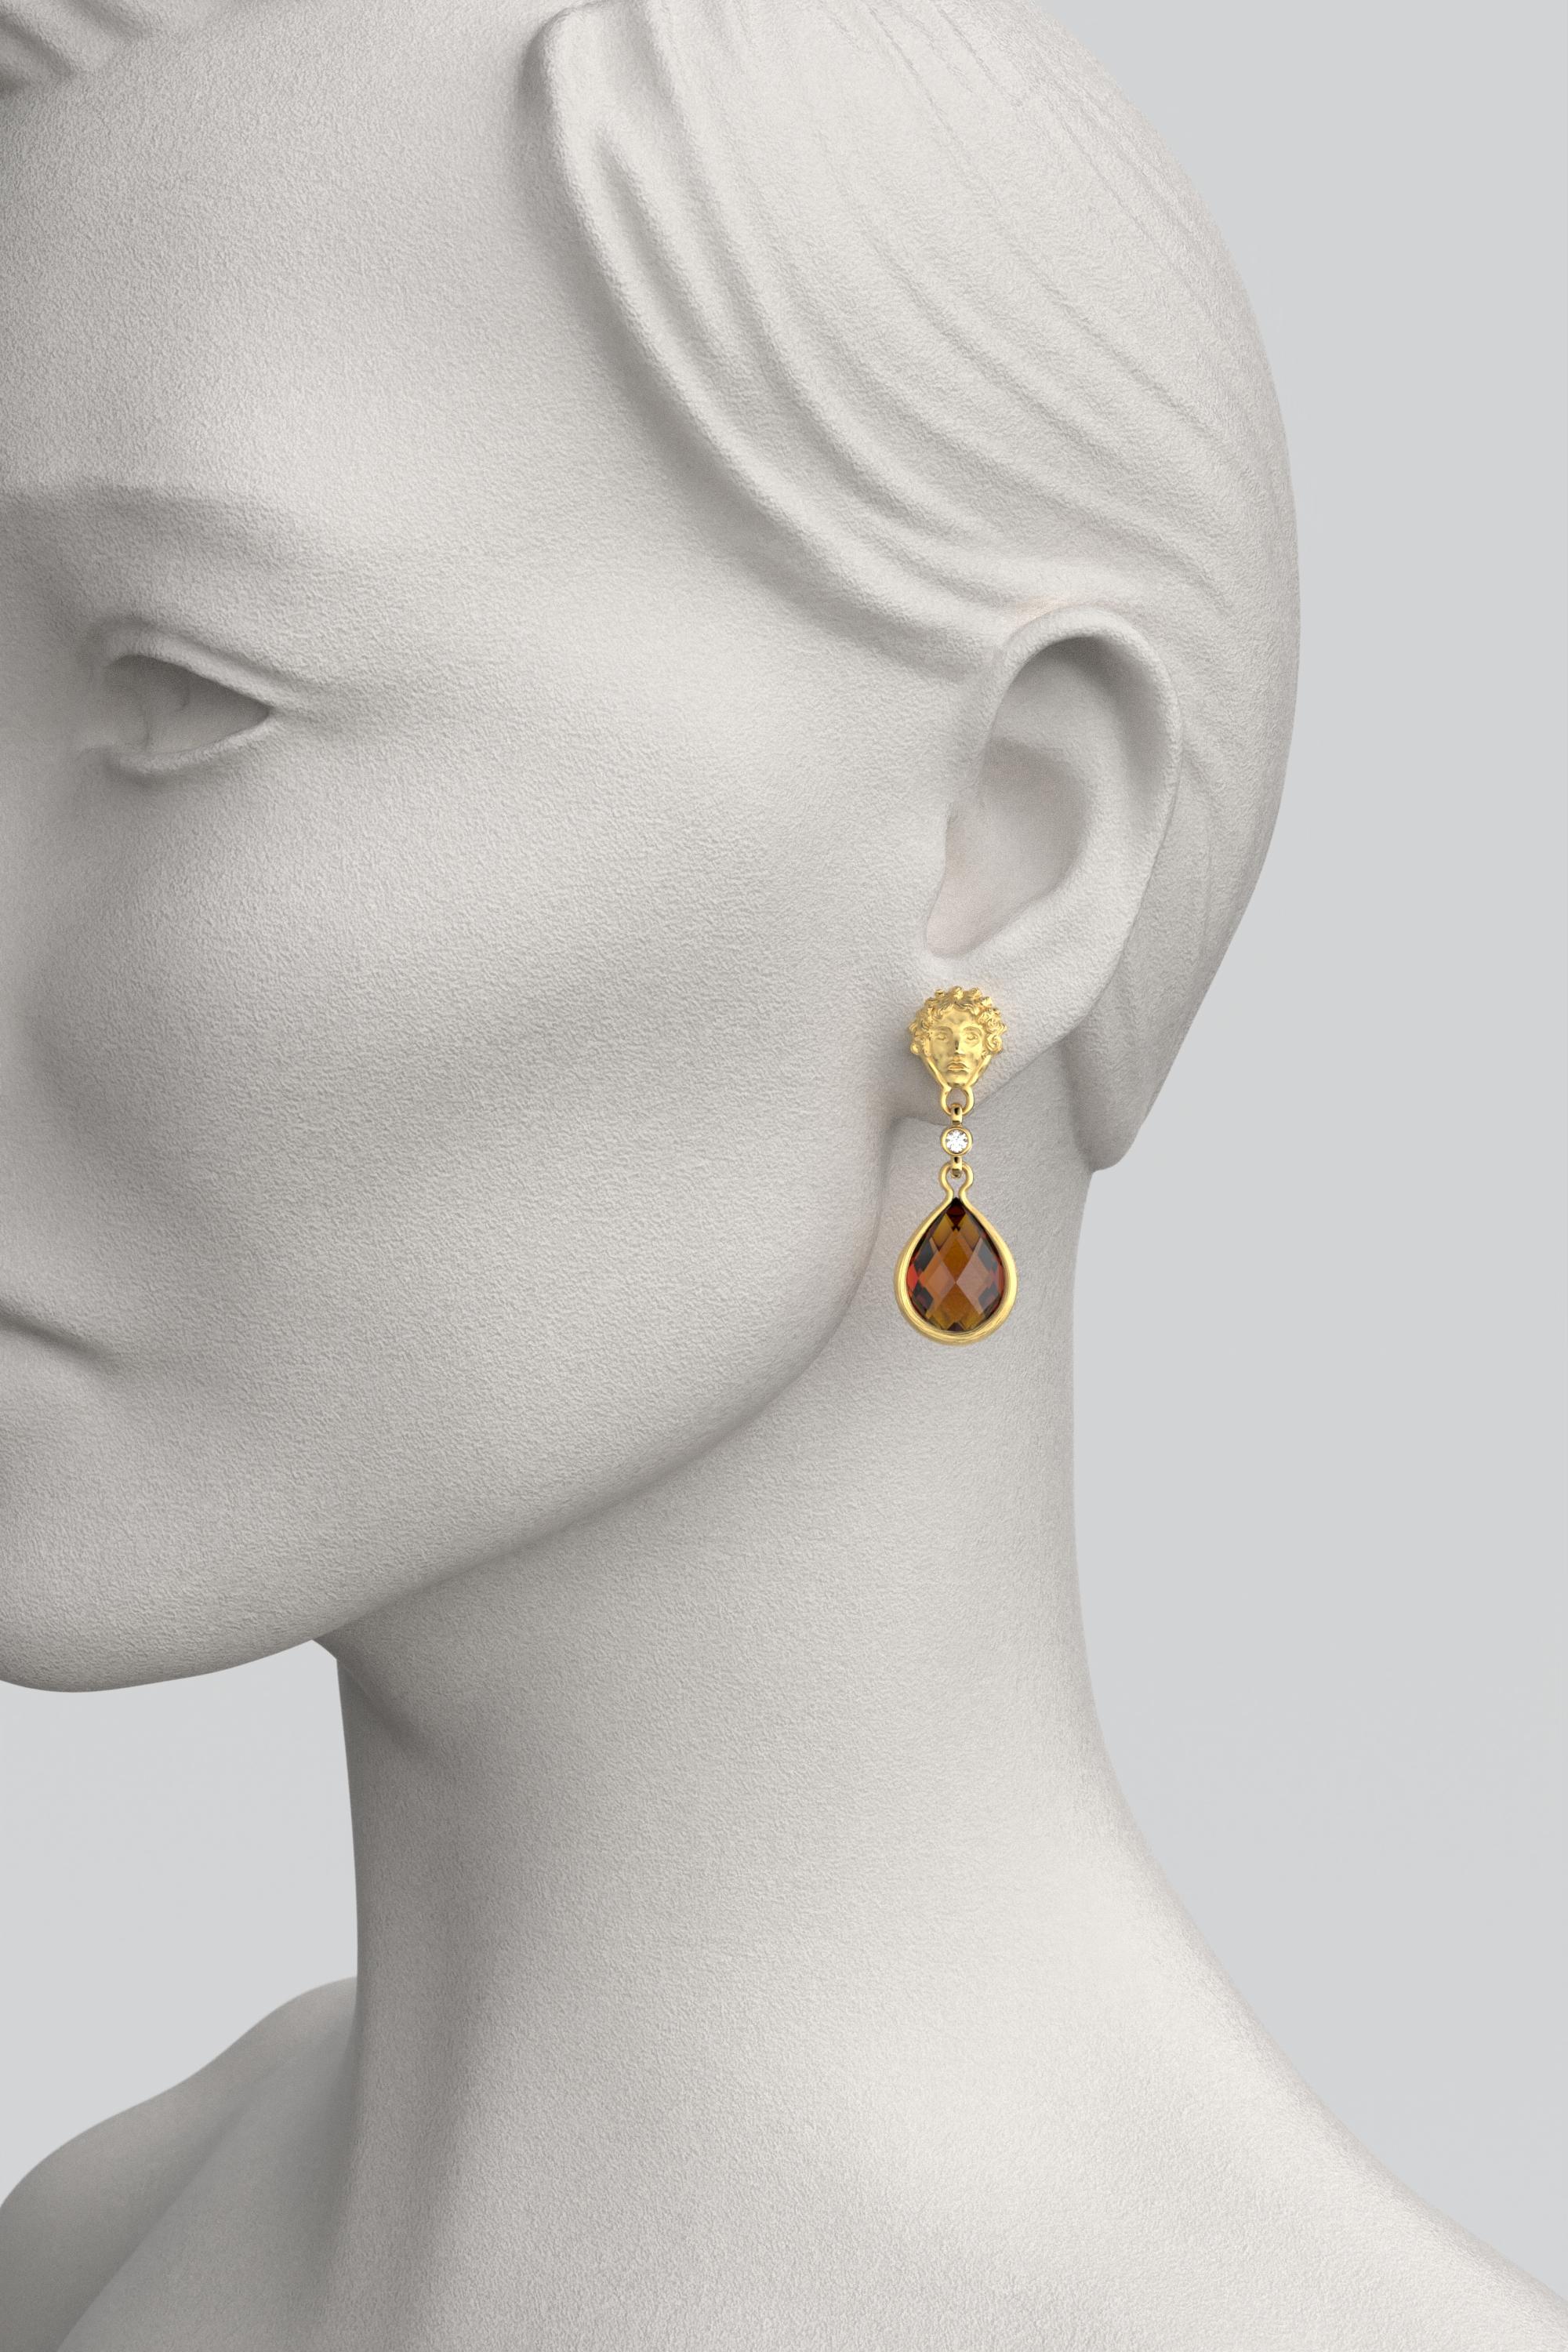 Oltremare Gioielli 14k Gold Madeira Citrine and Diamond Dangle Drop Earrings  In New Condition For Sale In Camisano Vicentino, VI